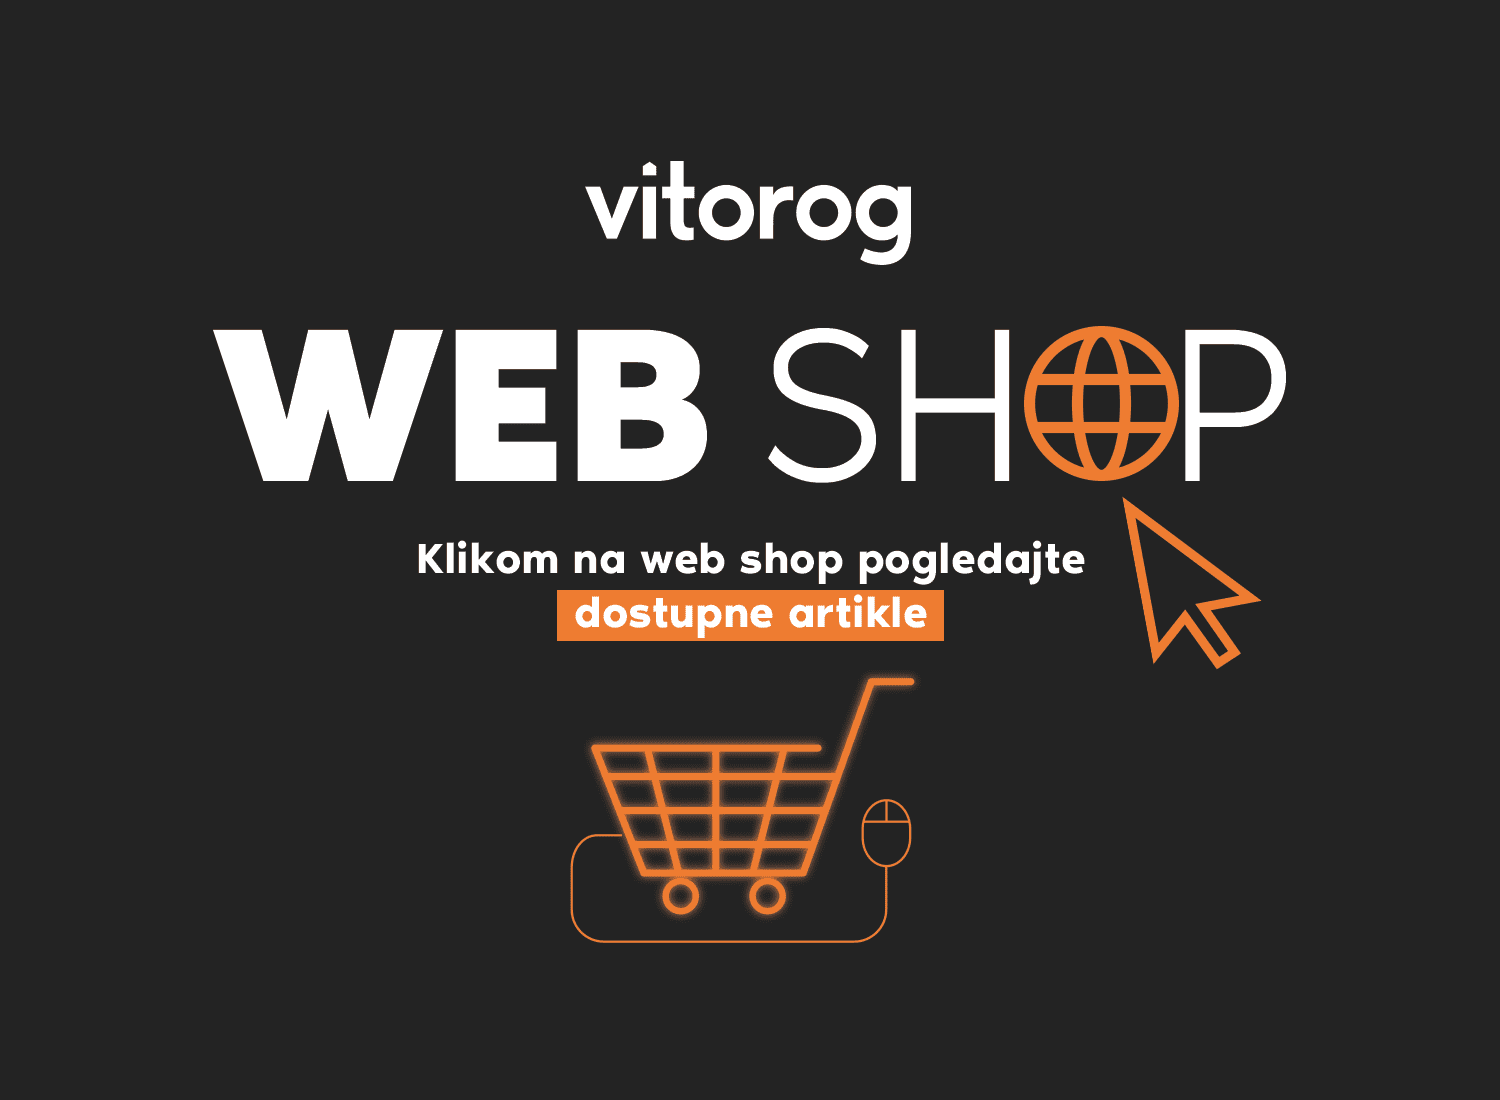 NOVO u Vitorogu – WEB SHOP!